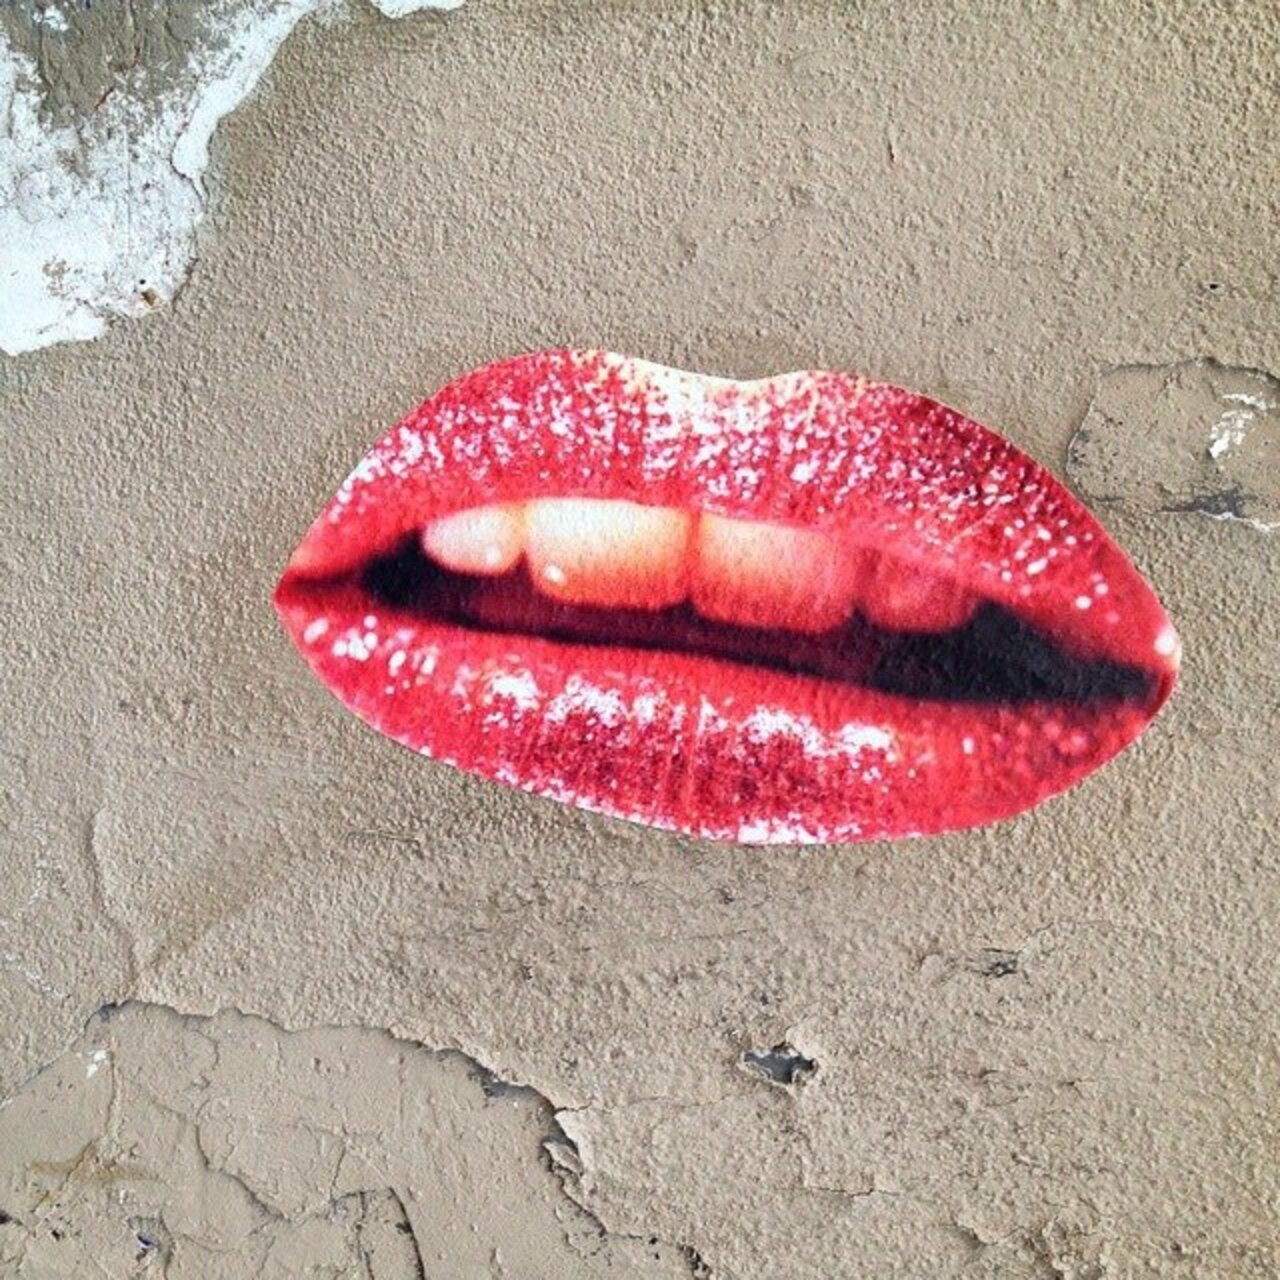 regram @benapix
Kiss me goodnight #streetart #urbanart #streetartparis #parisstreetart #paris13 #graffiti #collage … https://t.co/ouO1cA4Z1D